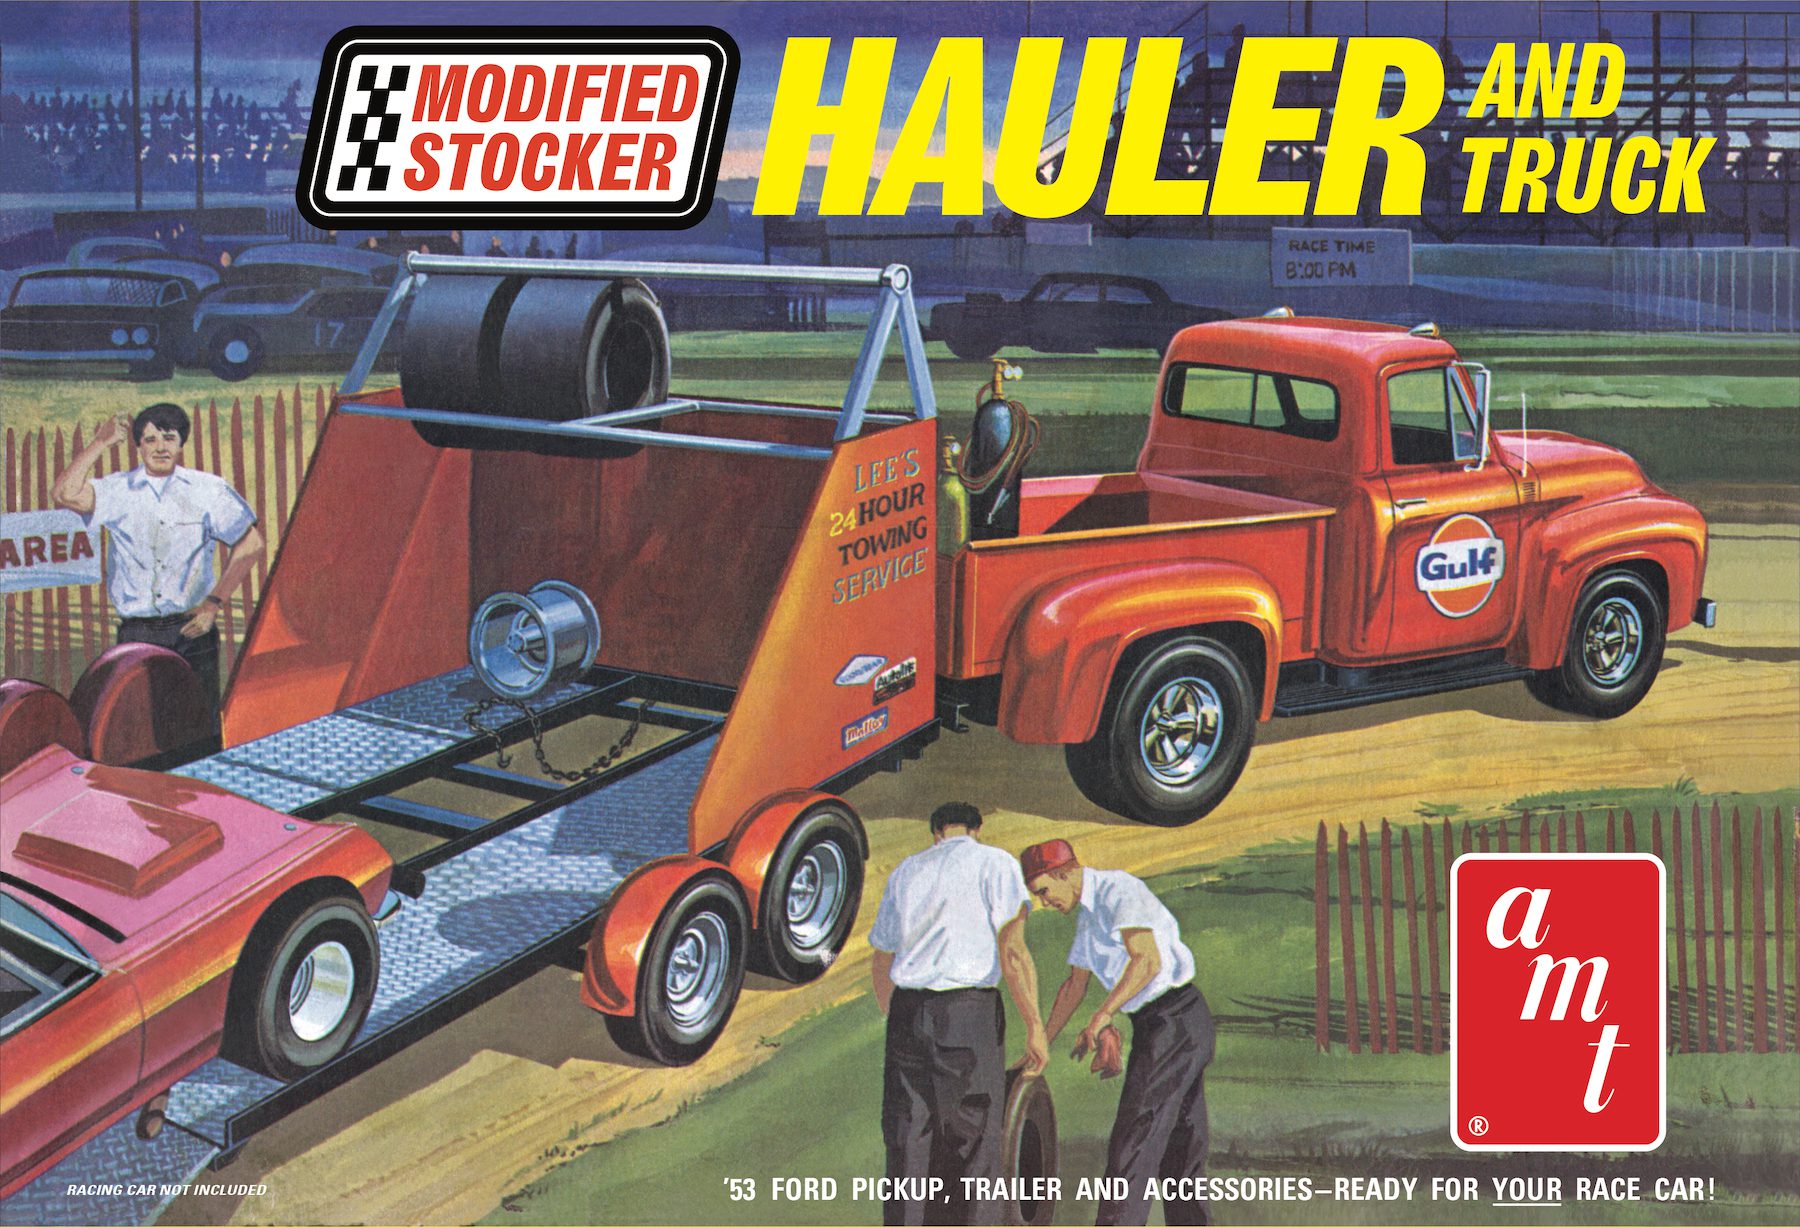 1/25 1953 Ford Pickup "Modified Stocked Hauler" Gulf